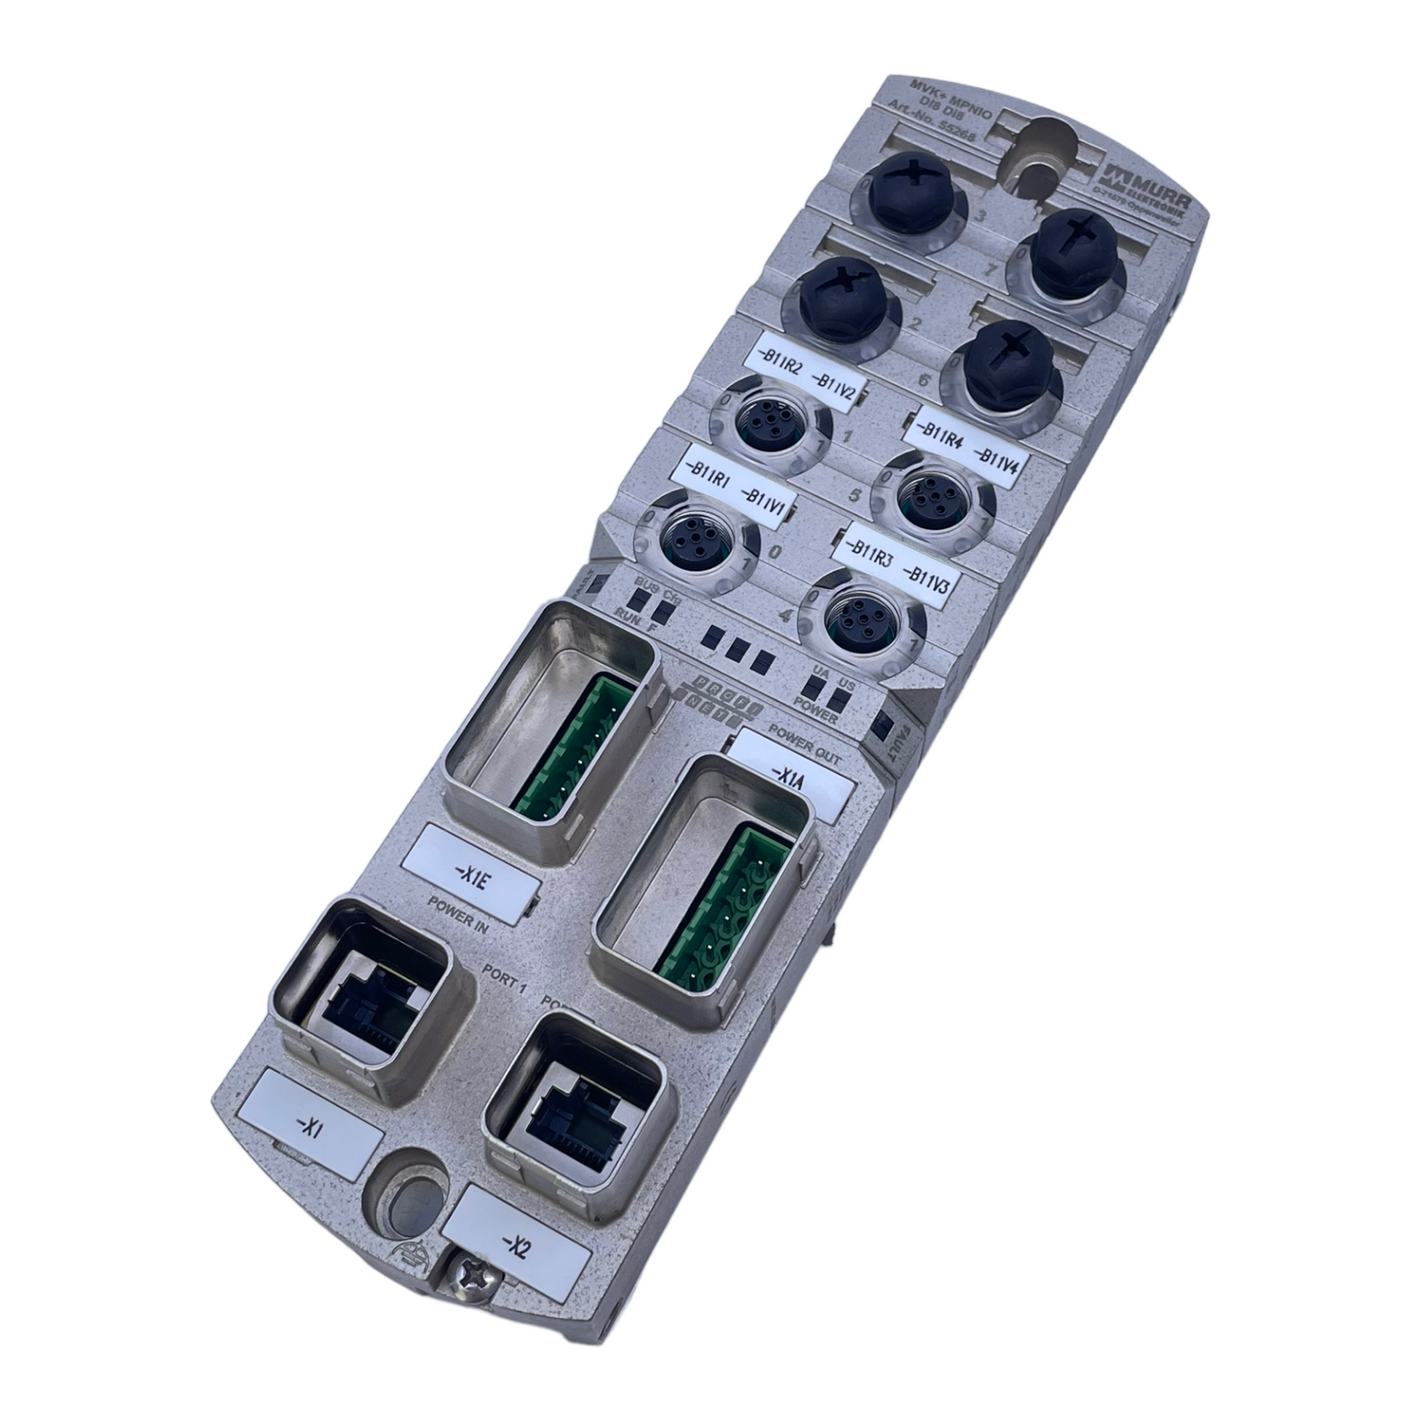 Murr Elektronik MVK+MPNIO DI8 DI8 55268 Kompaktmodul für Industrie Einsatz